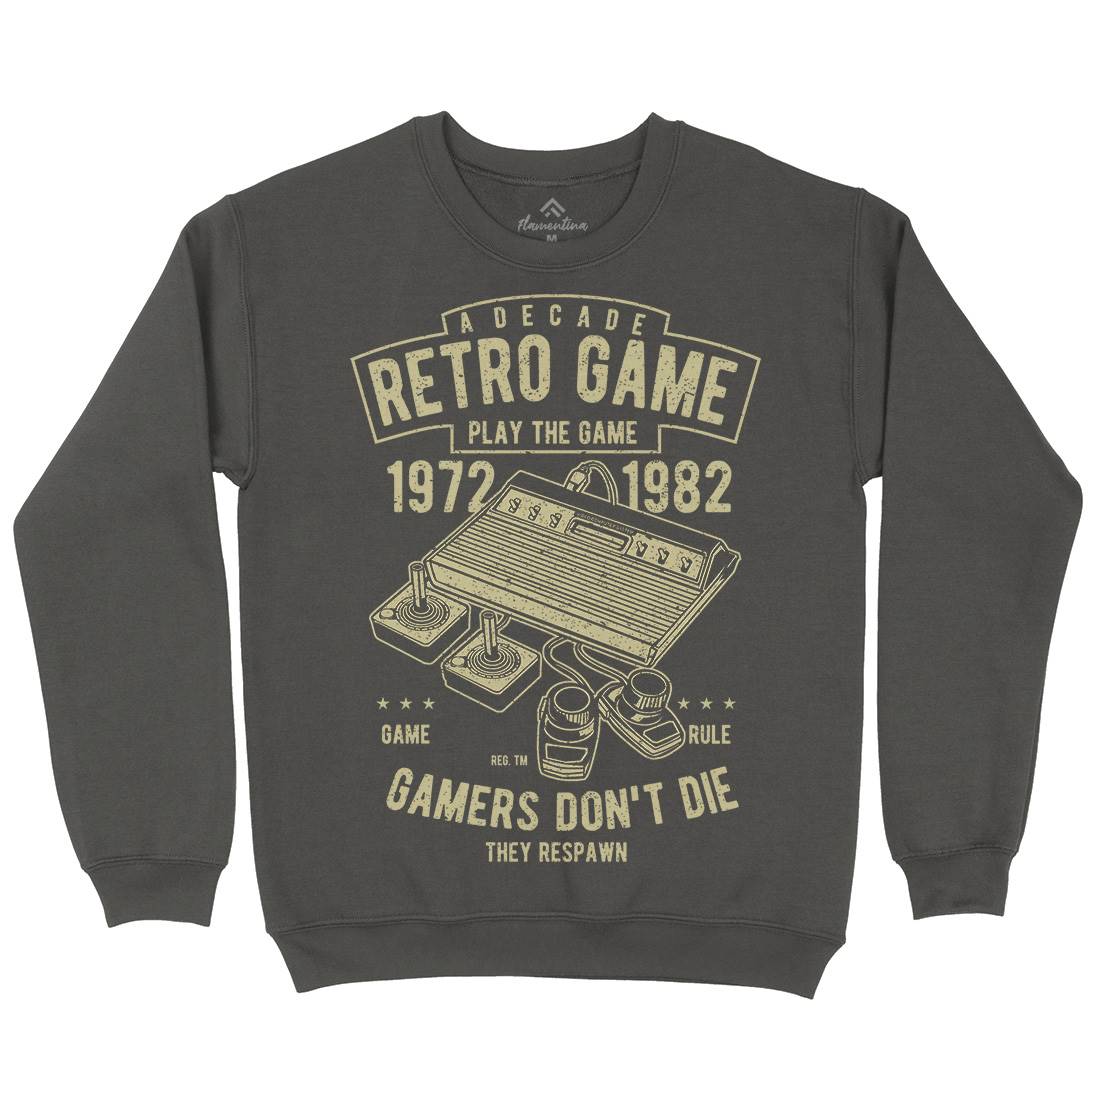 Retro Game Club Kids Crew Neck Sweatshirt Geek A741